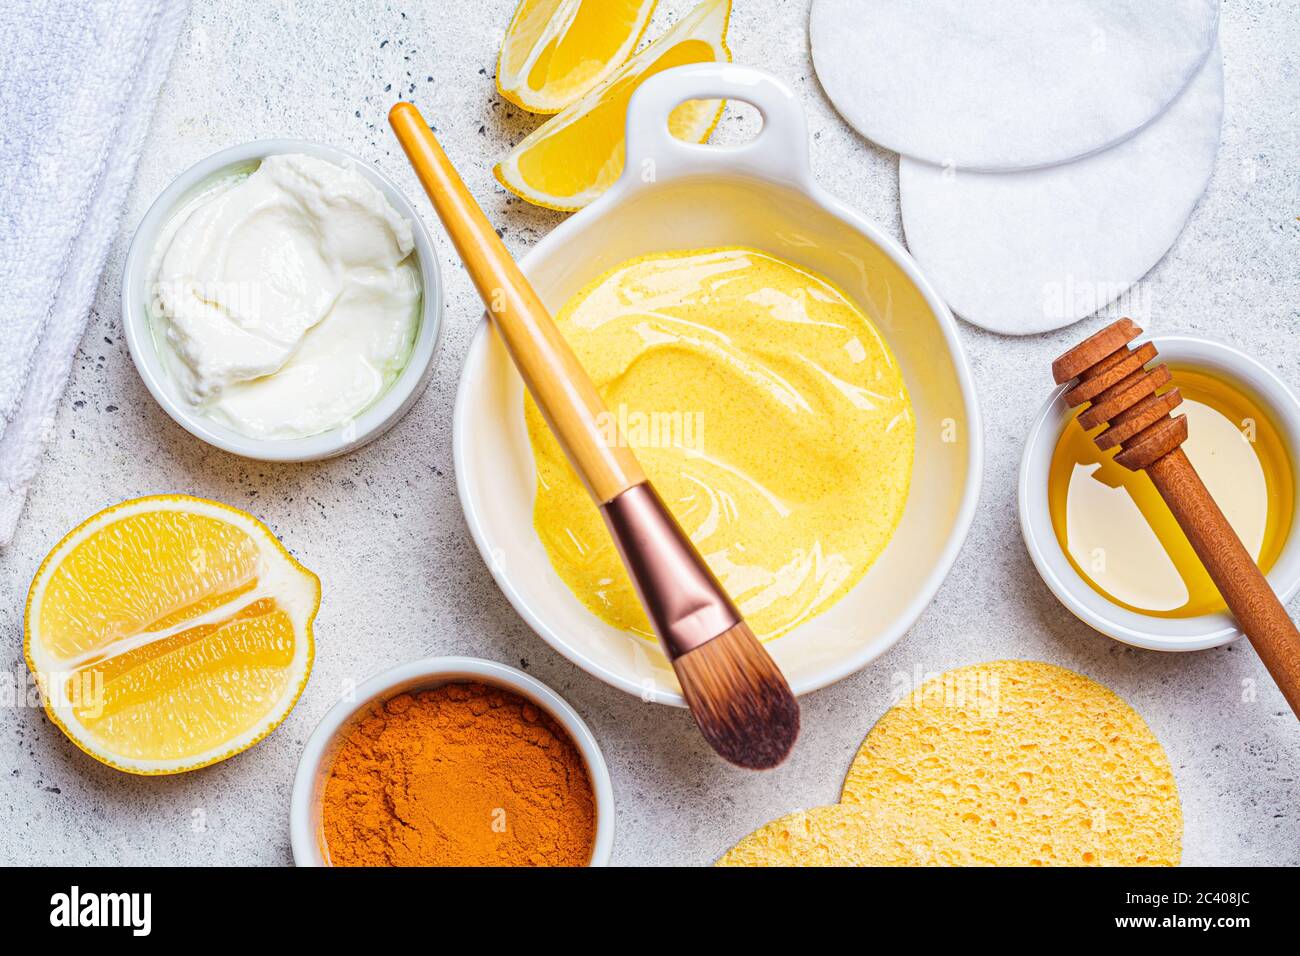 Preparazione maschera curcuma con miele e yogurt Foto stock - Alamy